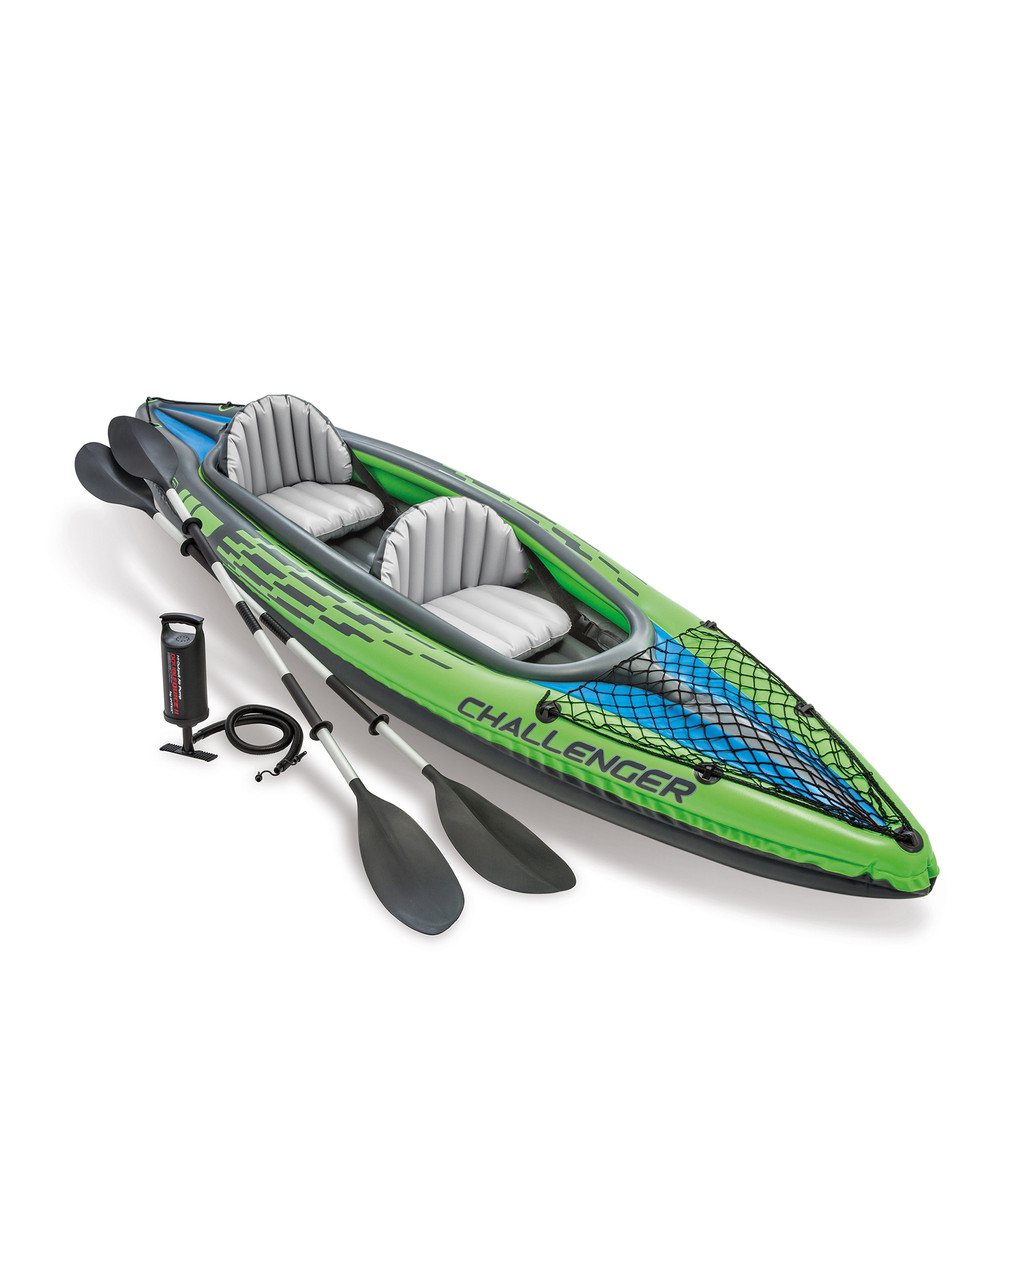 INTEX Challenger™ K2 Inflatable Kayak - 2 Person